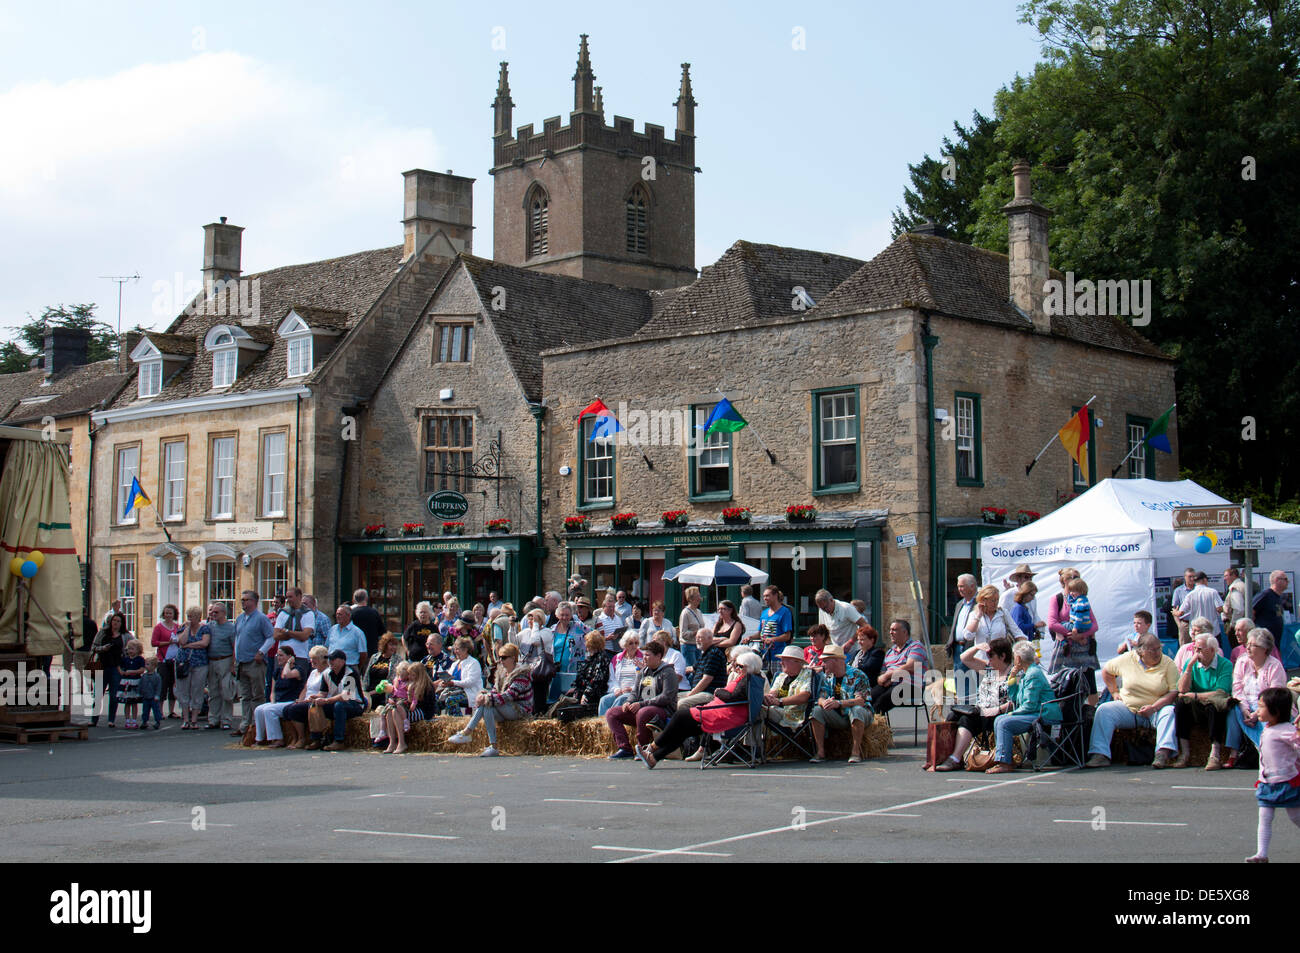 Personas en el Festival de Cotswold, Stow-on-the-Wold, Gloucestershire, Reino Unido Foto de stock